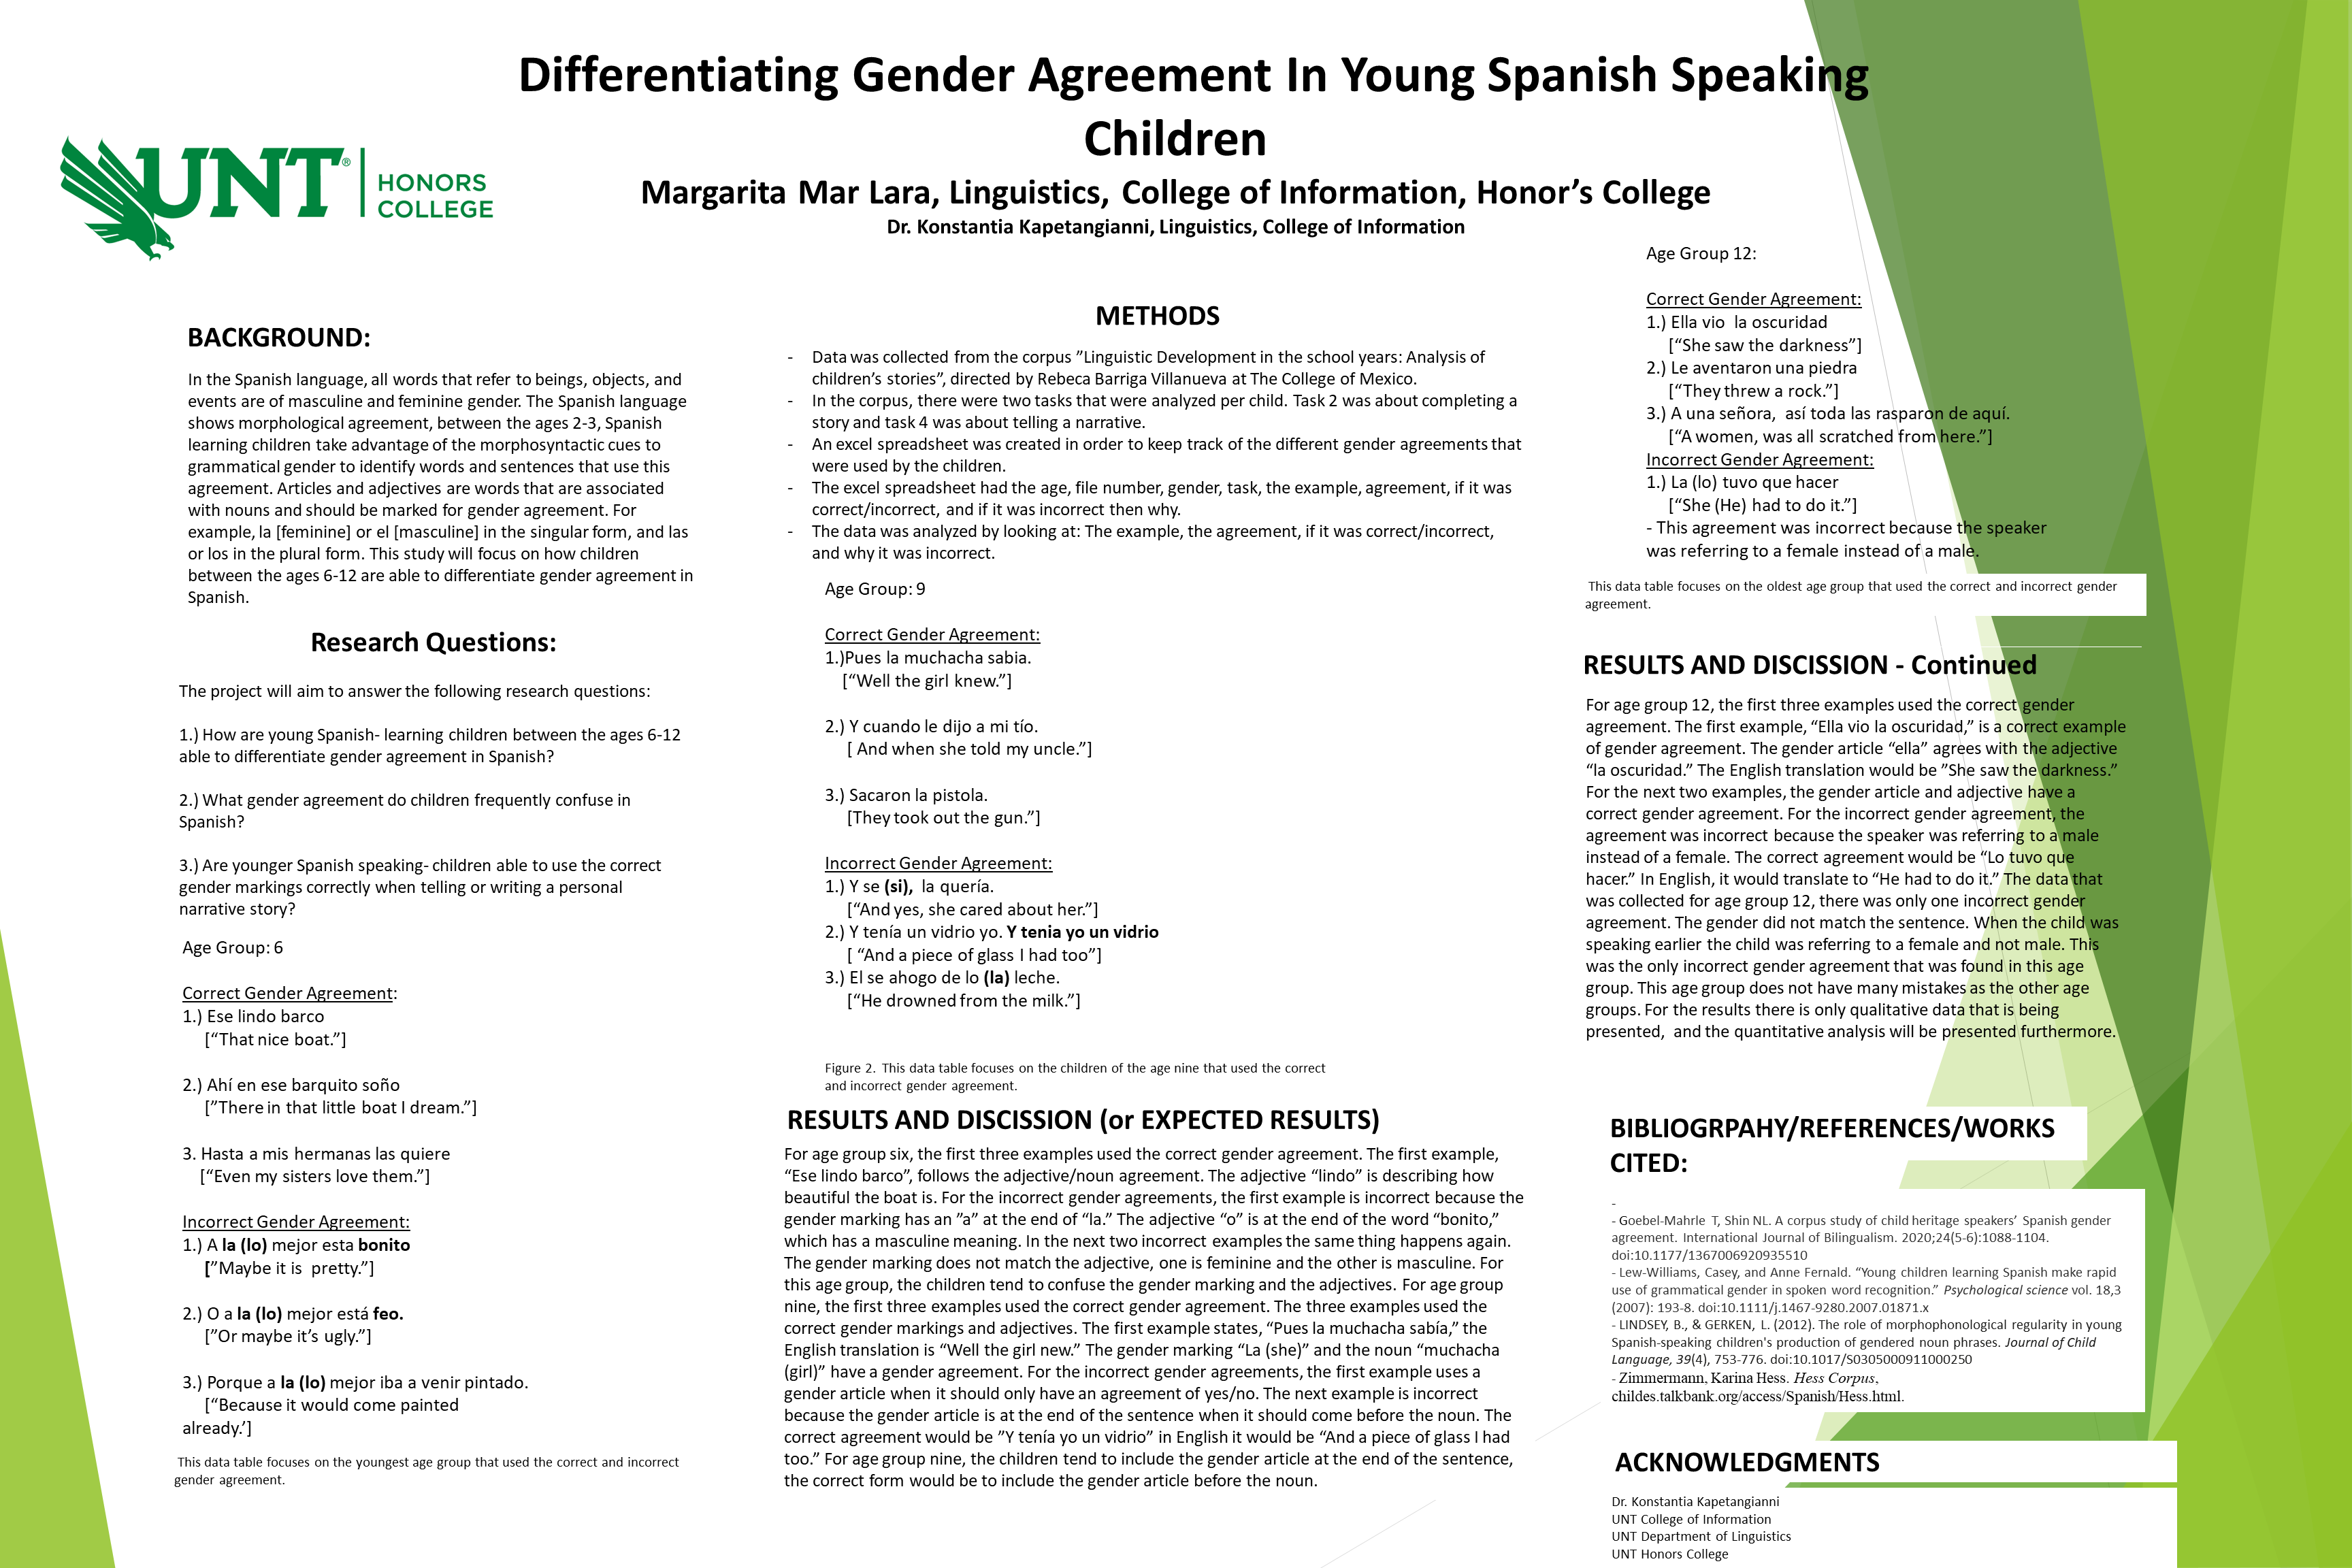 Differentiating Gender Agreement In Young Spanish Speaking Children